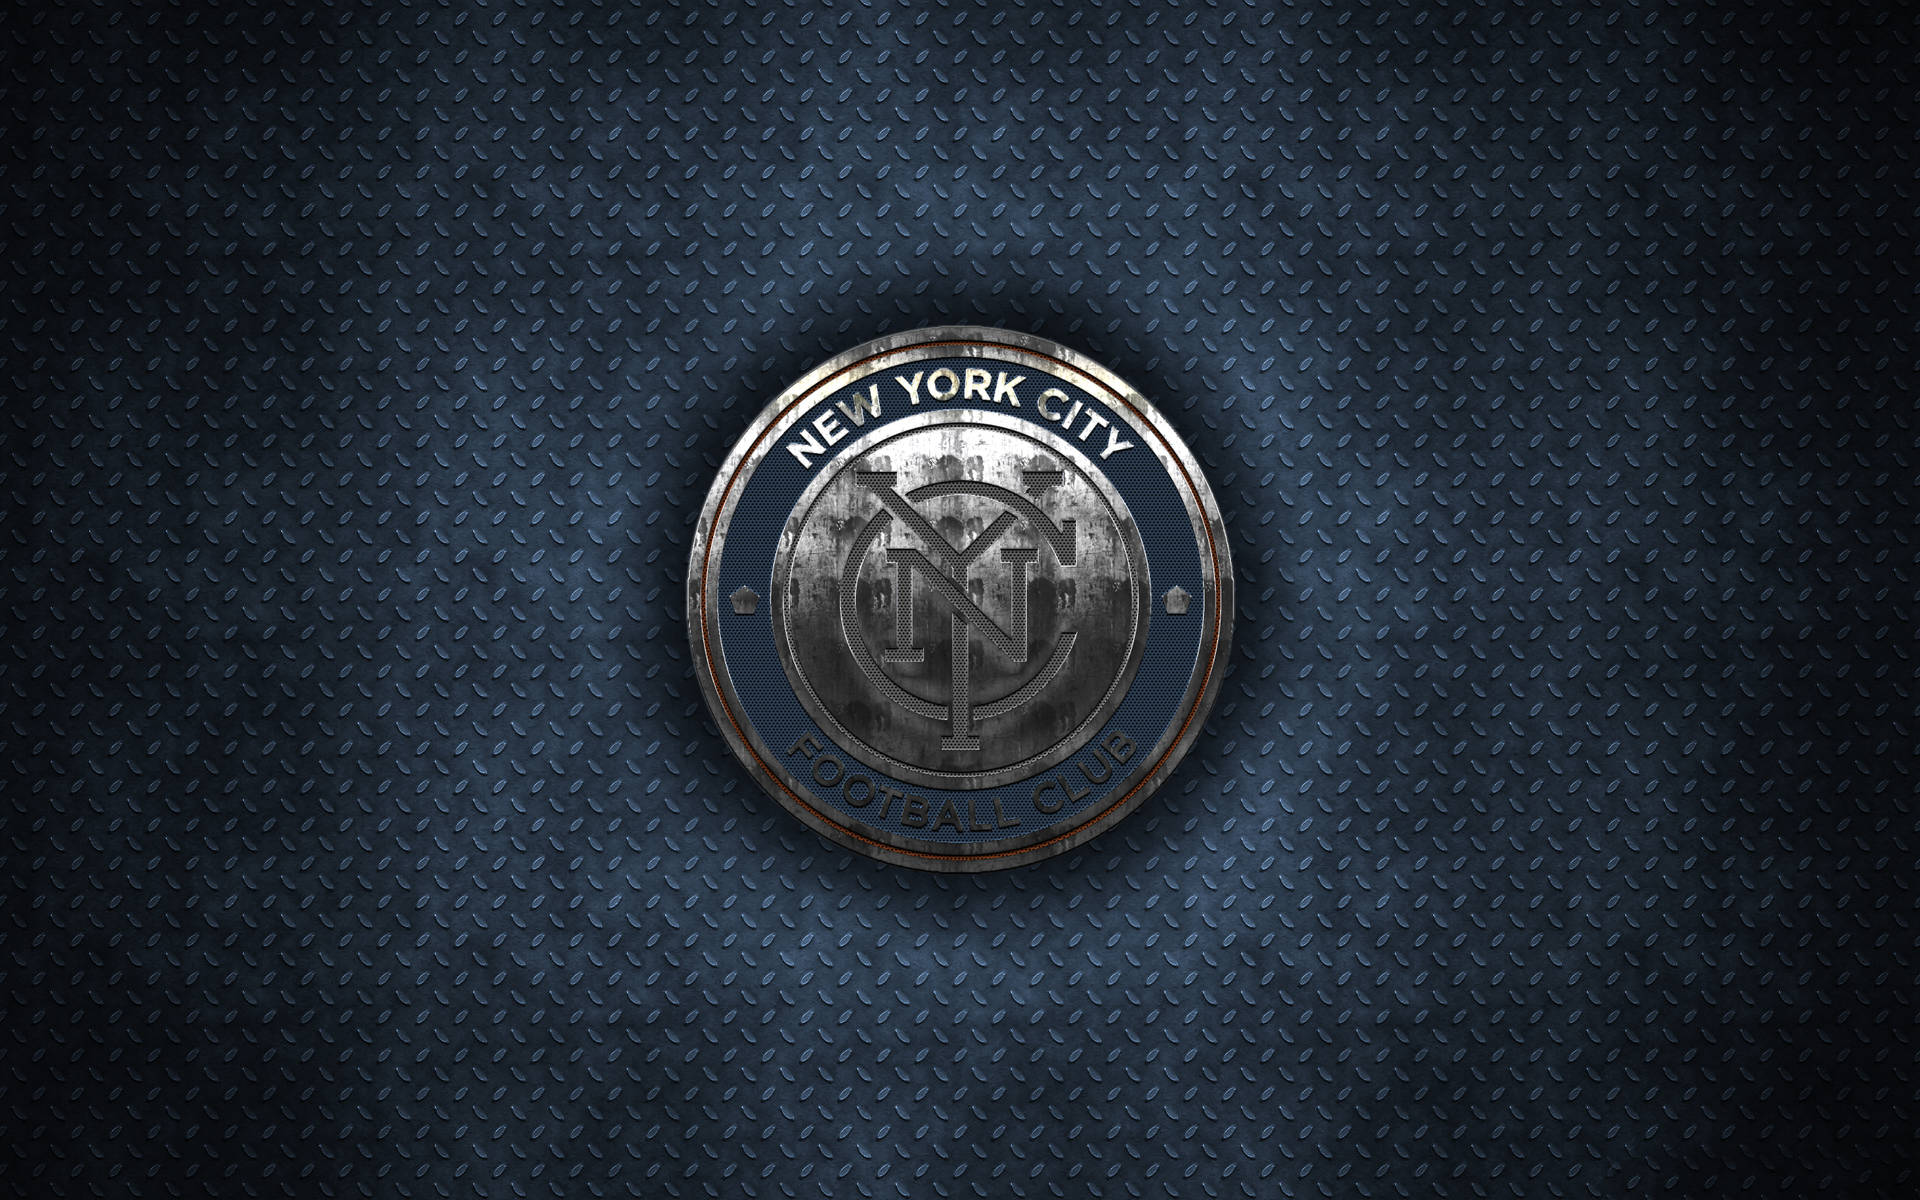 New York Hd Fc Logo Diamond Plate